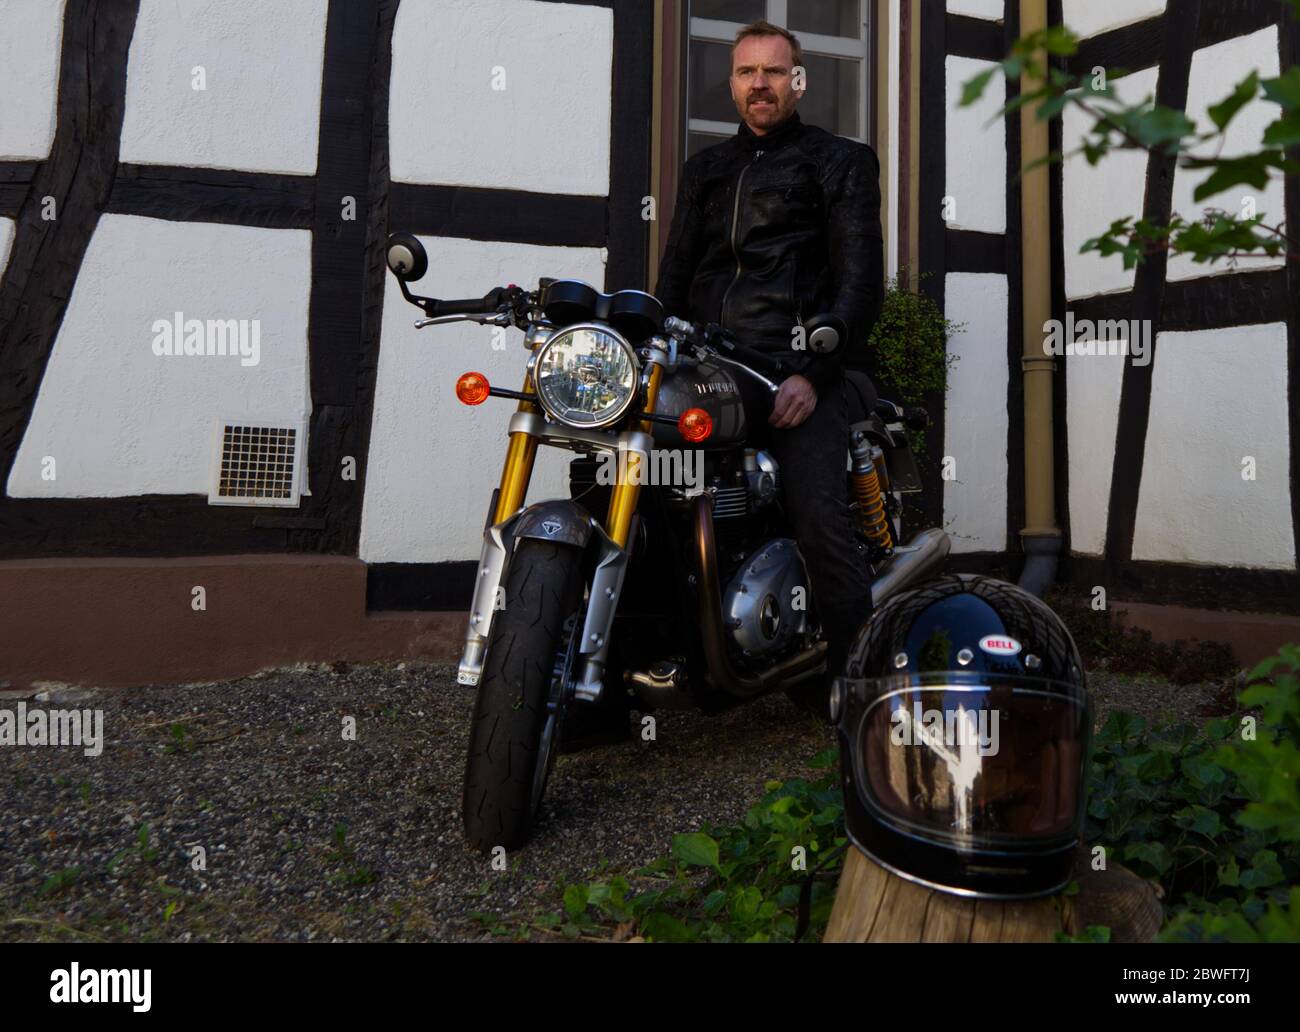 Bicker in black leather jaket on his bike Stock Photo